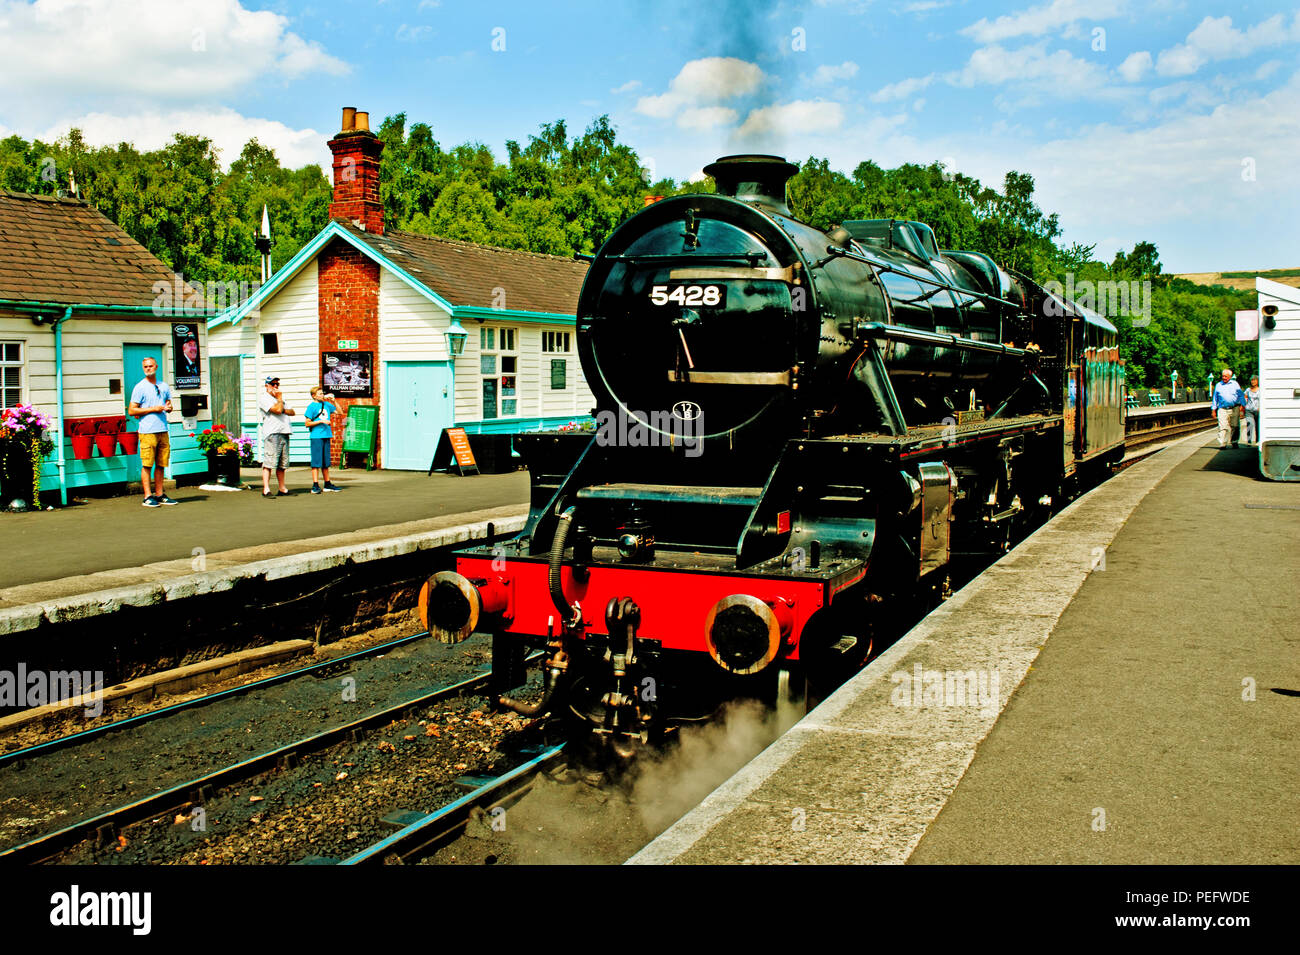 LMS Black 5 No 5428 at Grosmont, North Yorkshire Moors Railway, England Stock Photo